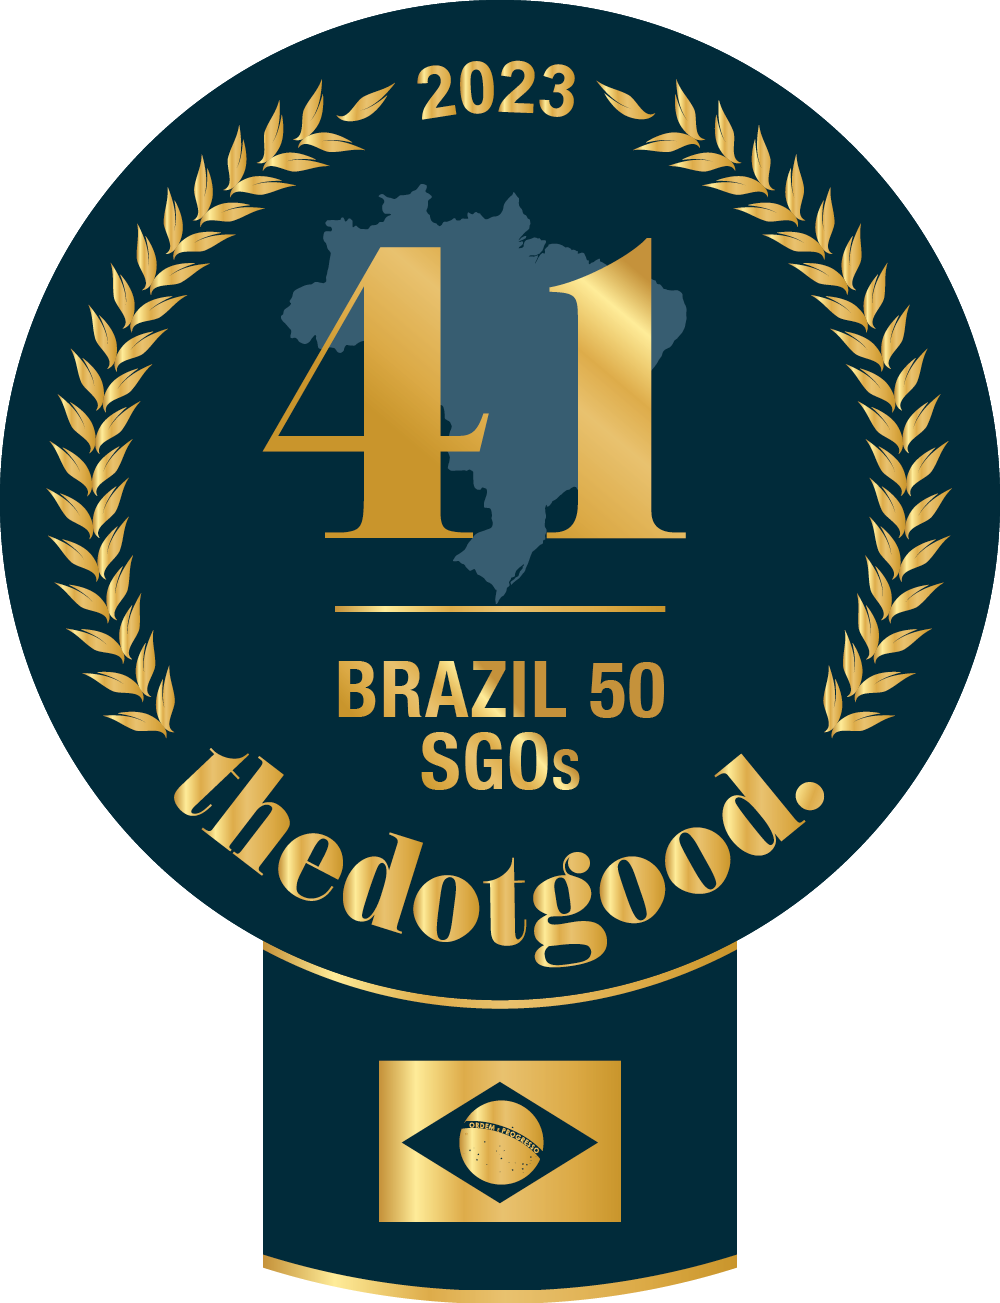 PRO CRIANÇA CARDÍACA is brazil ranked on thedotgood.